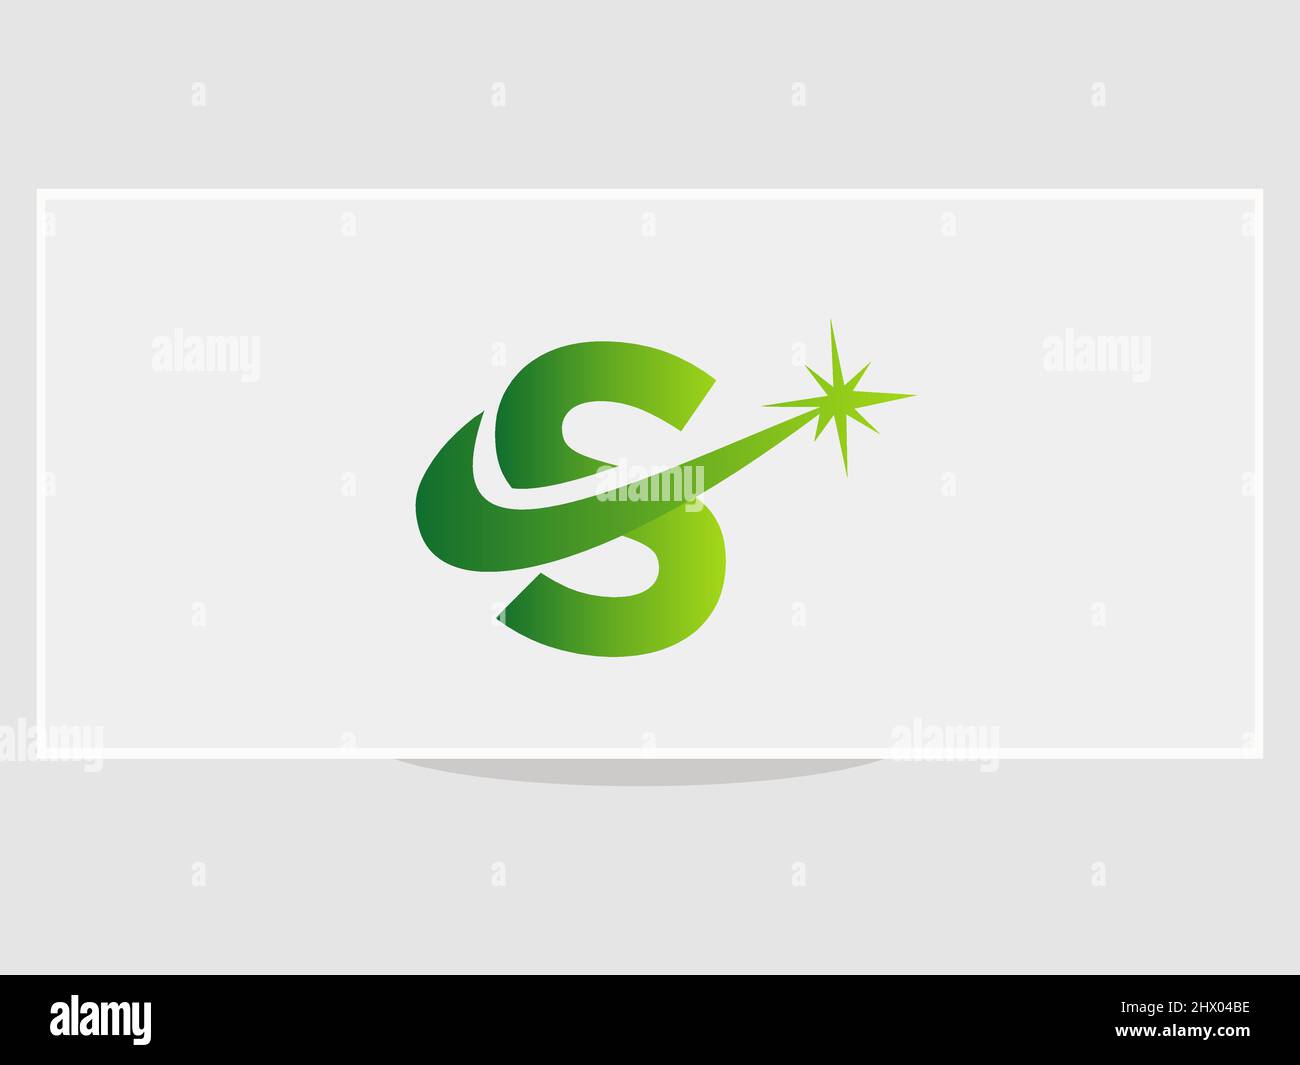 Quality Logo Design, Graphic Design, Web Development | Spark Creative